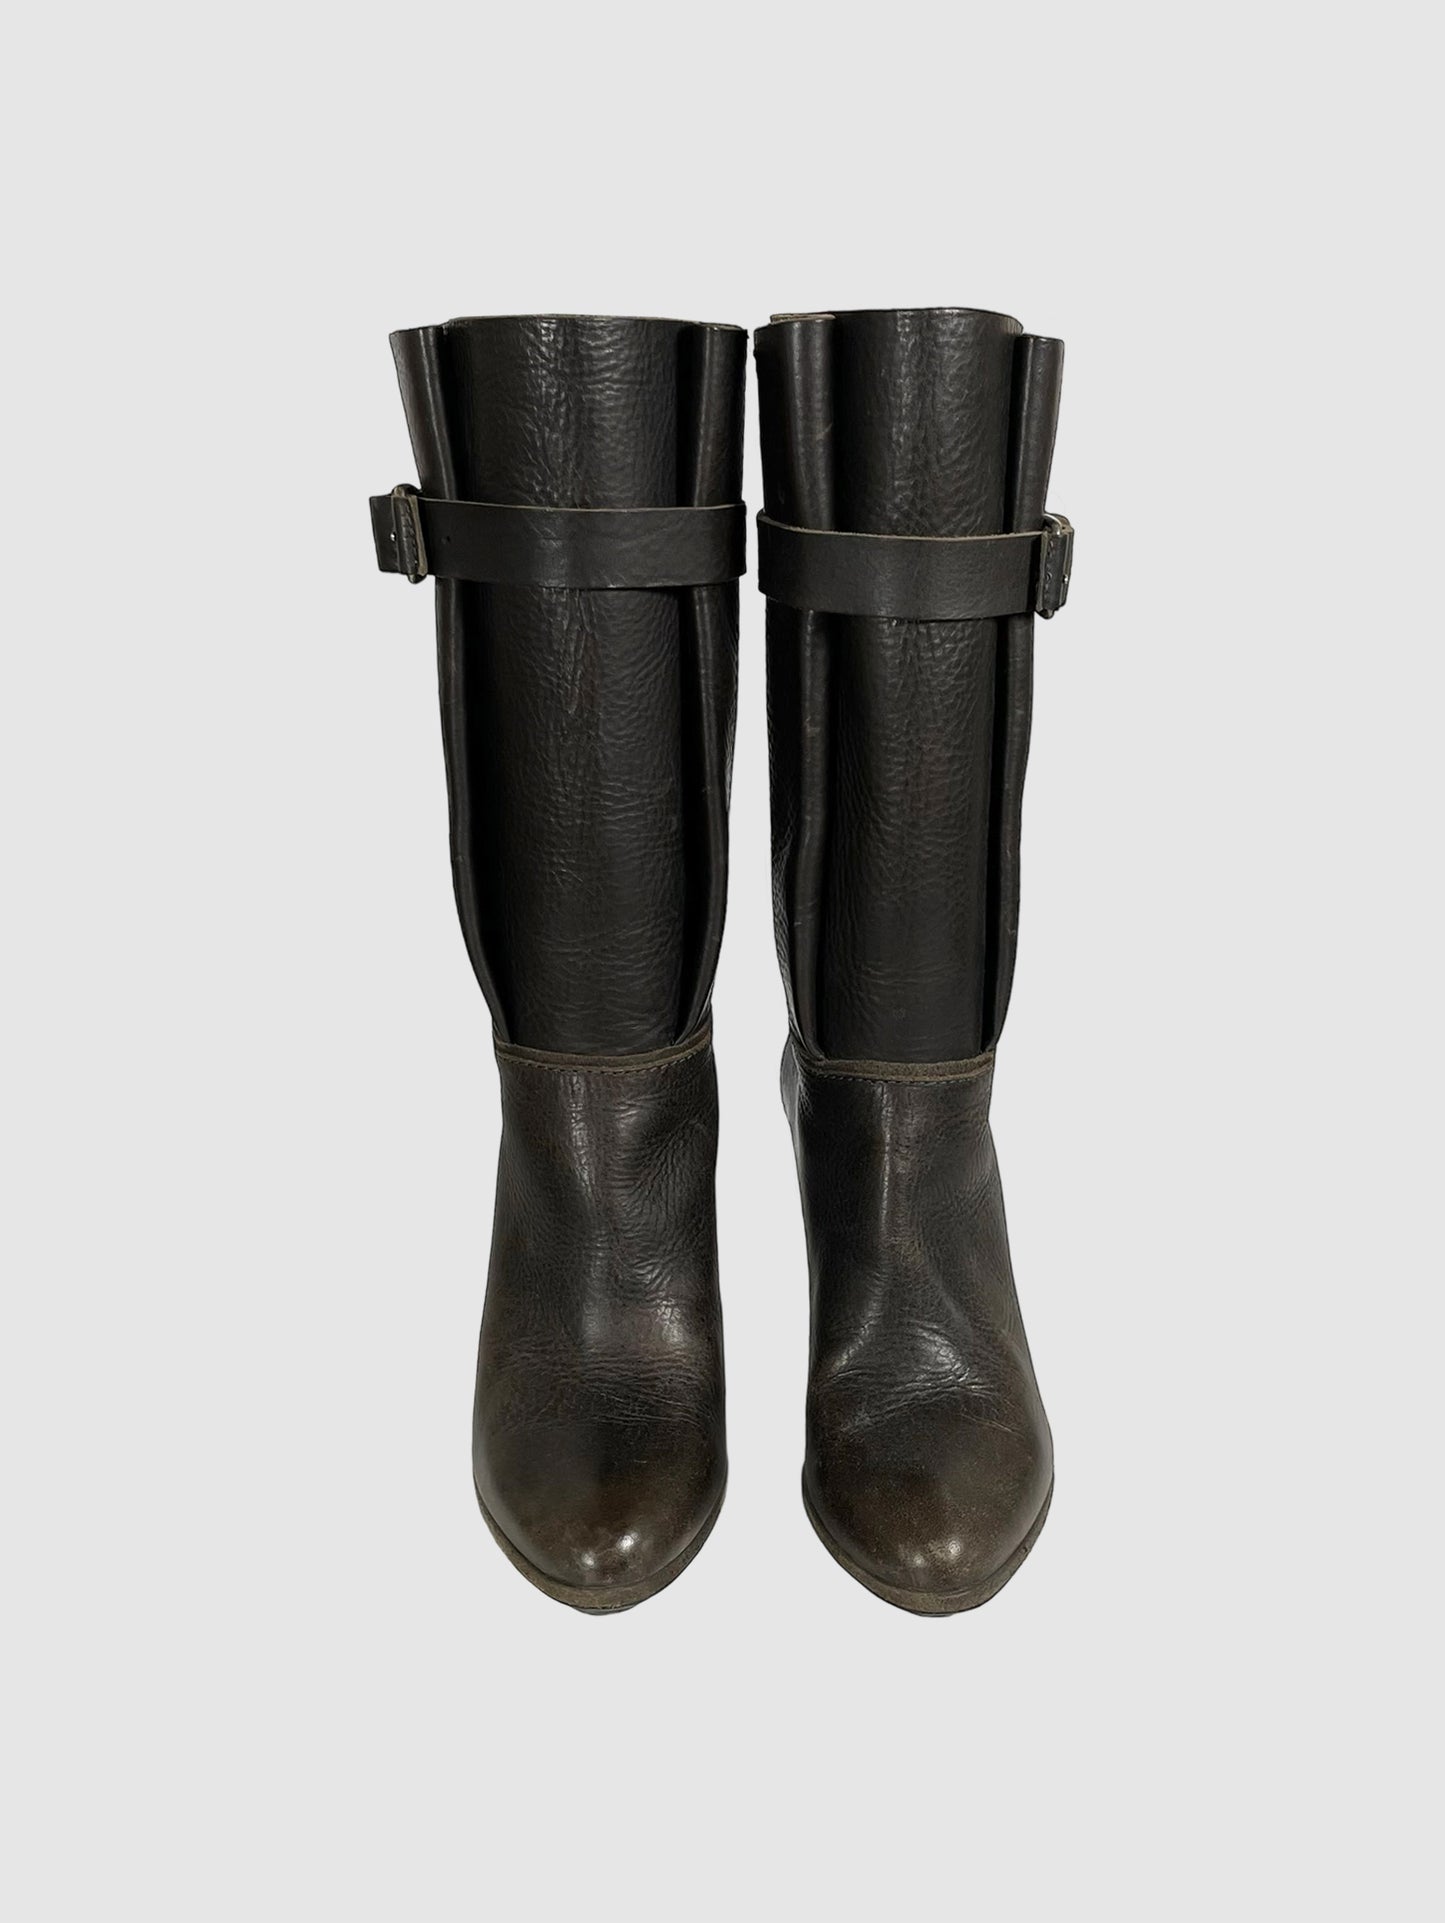 Balenciaga Tall Heeled Boots - Size 36.5